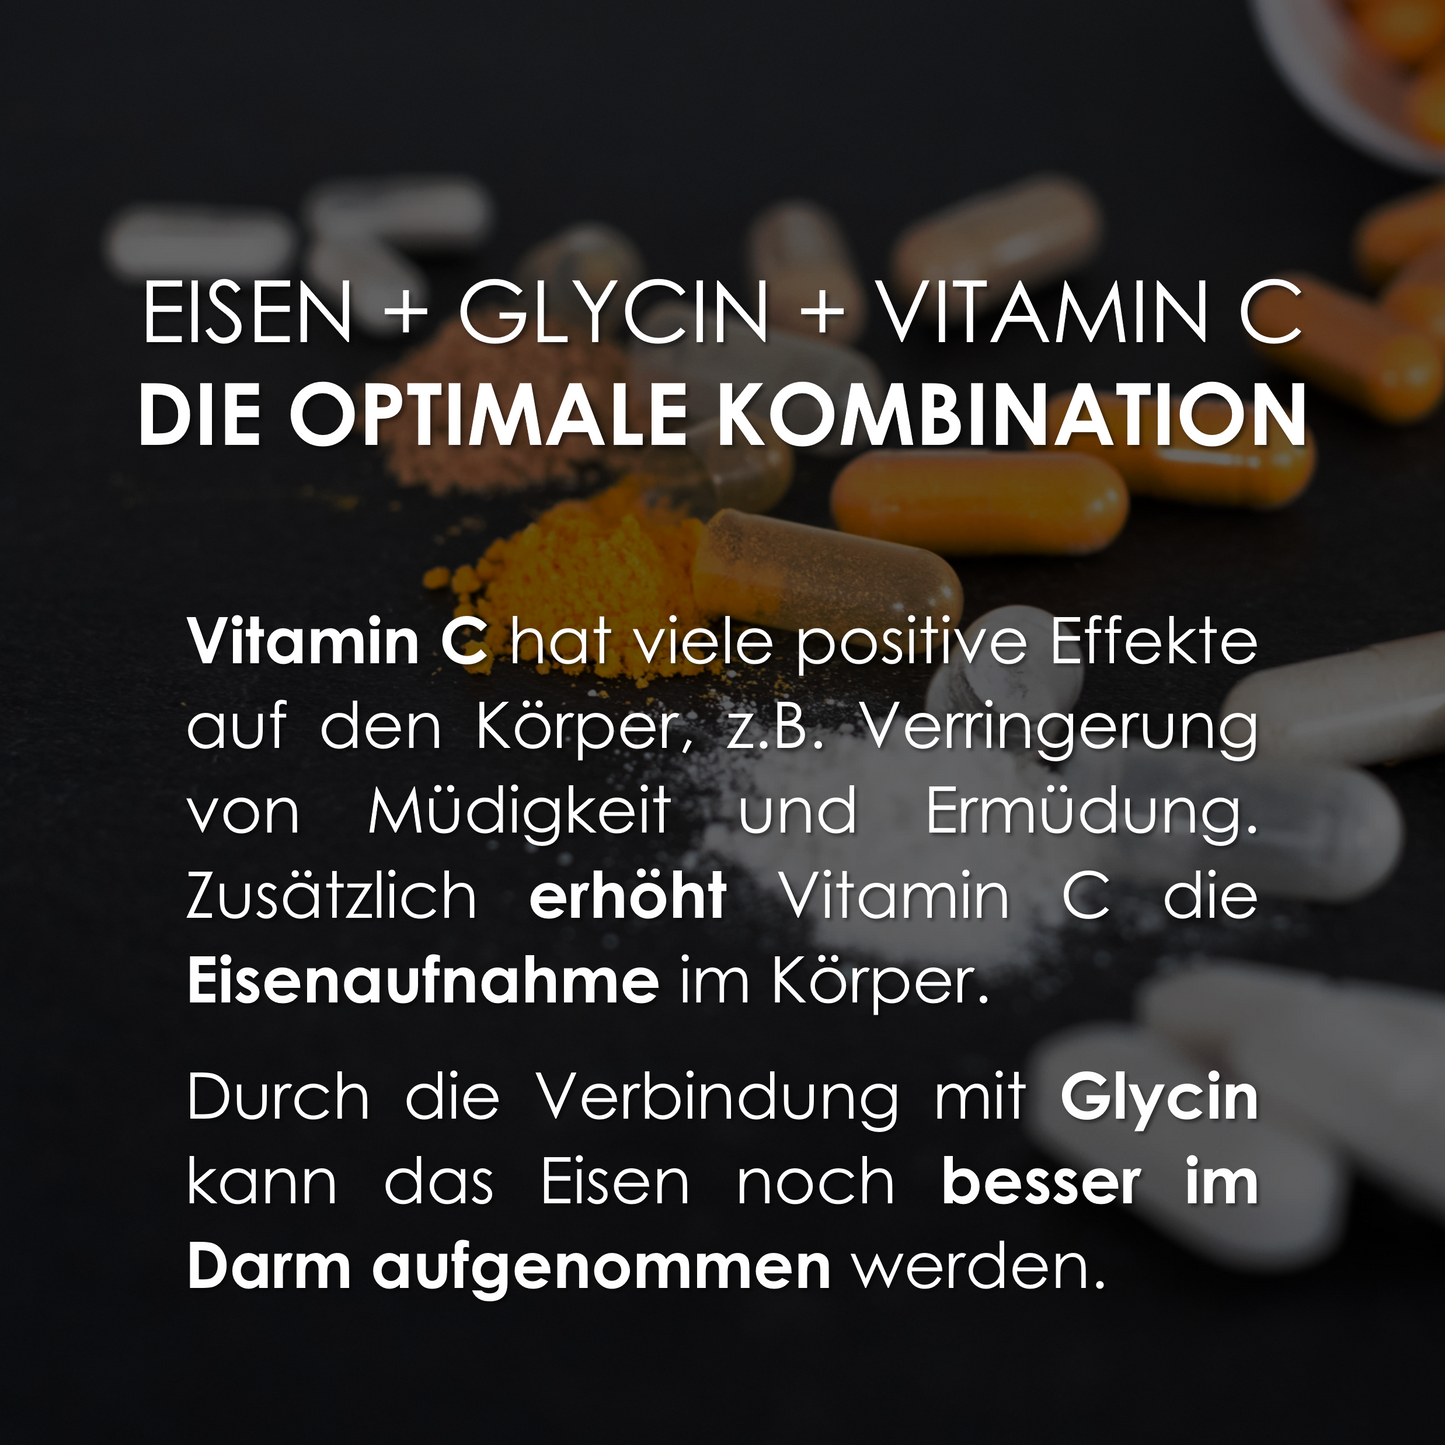 Eisen + Glycin + Vitamin C 